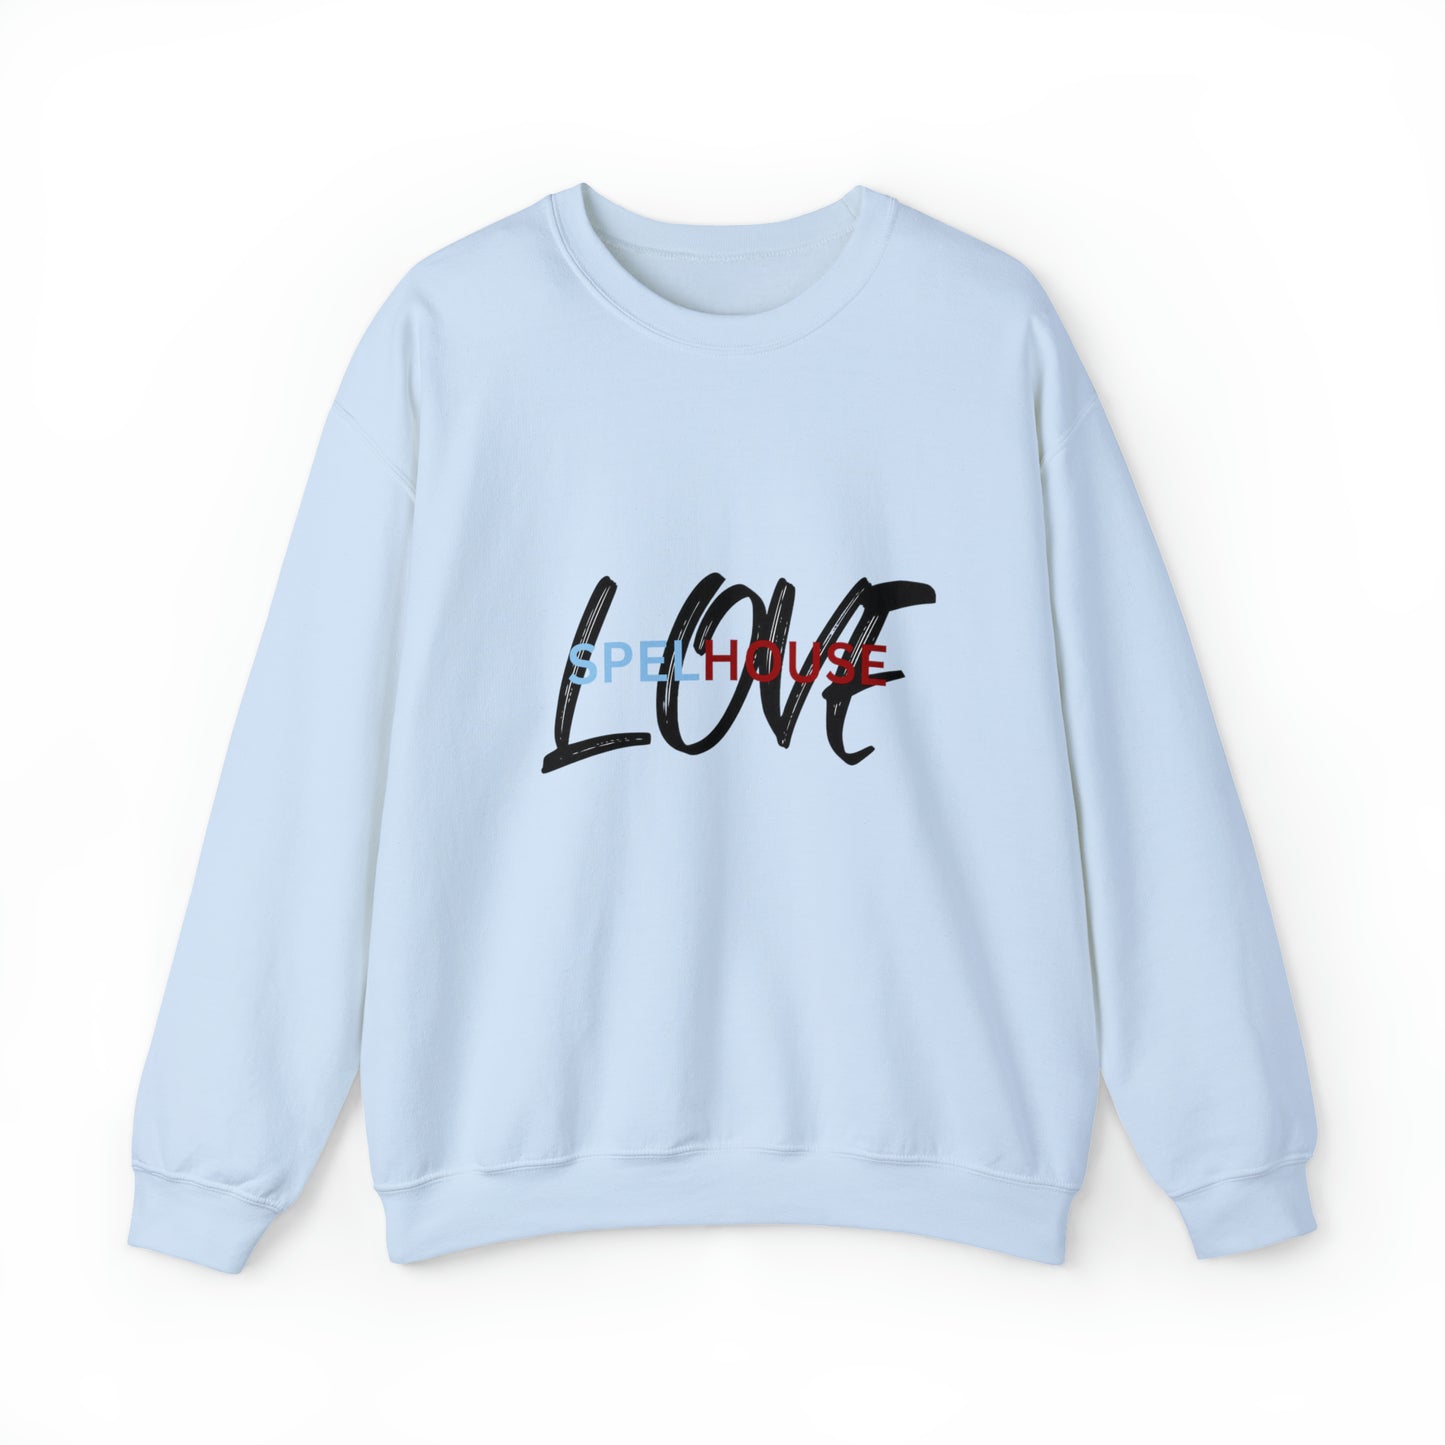 SPELHOUSE LOVE Crewneck Sweatshirt